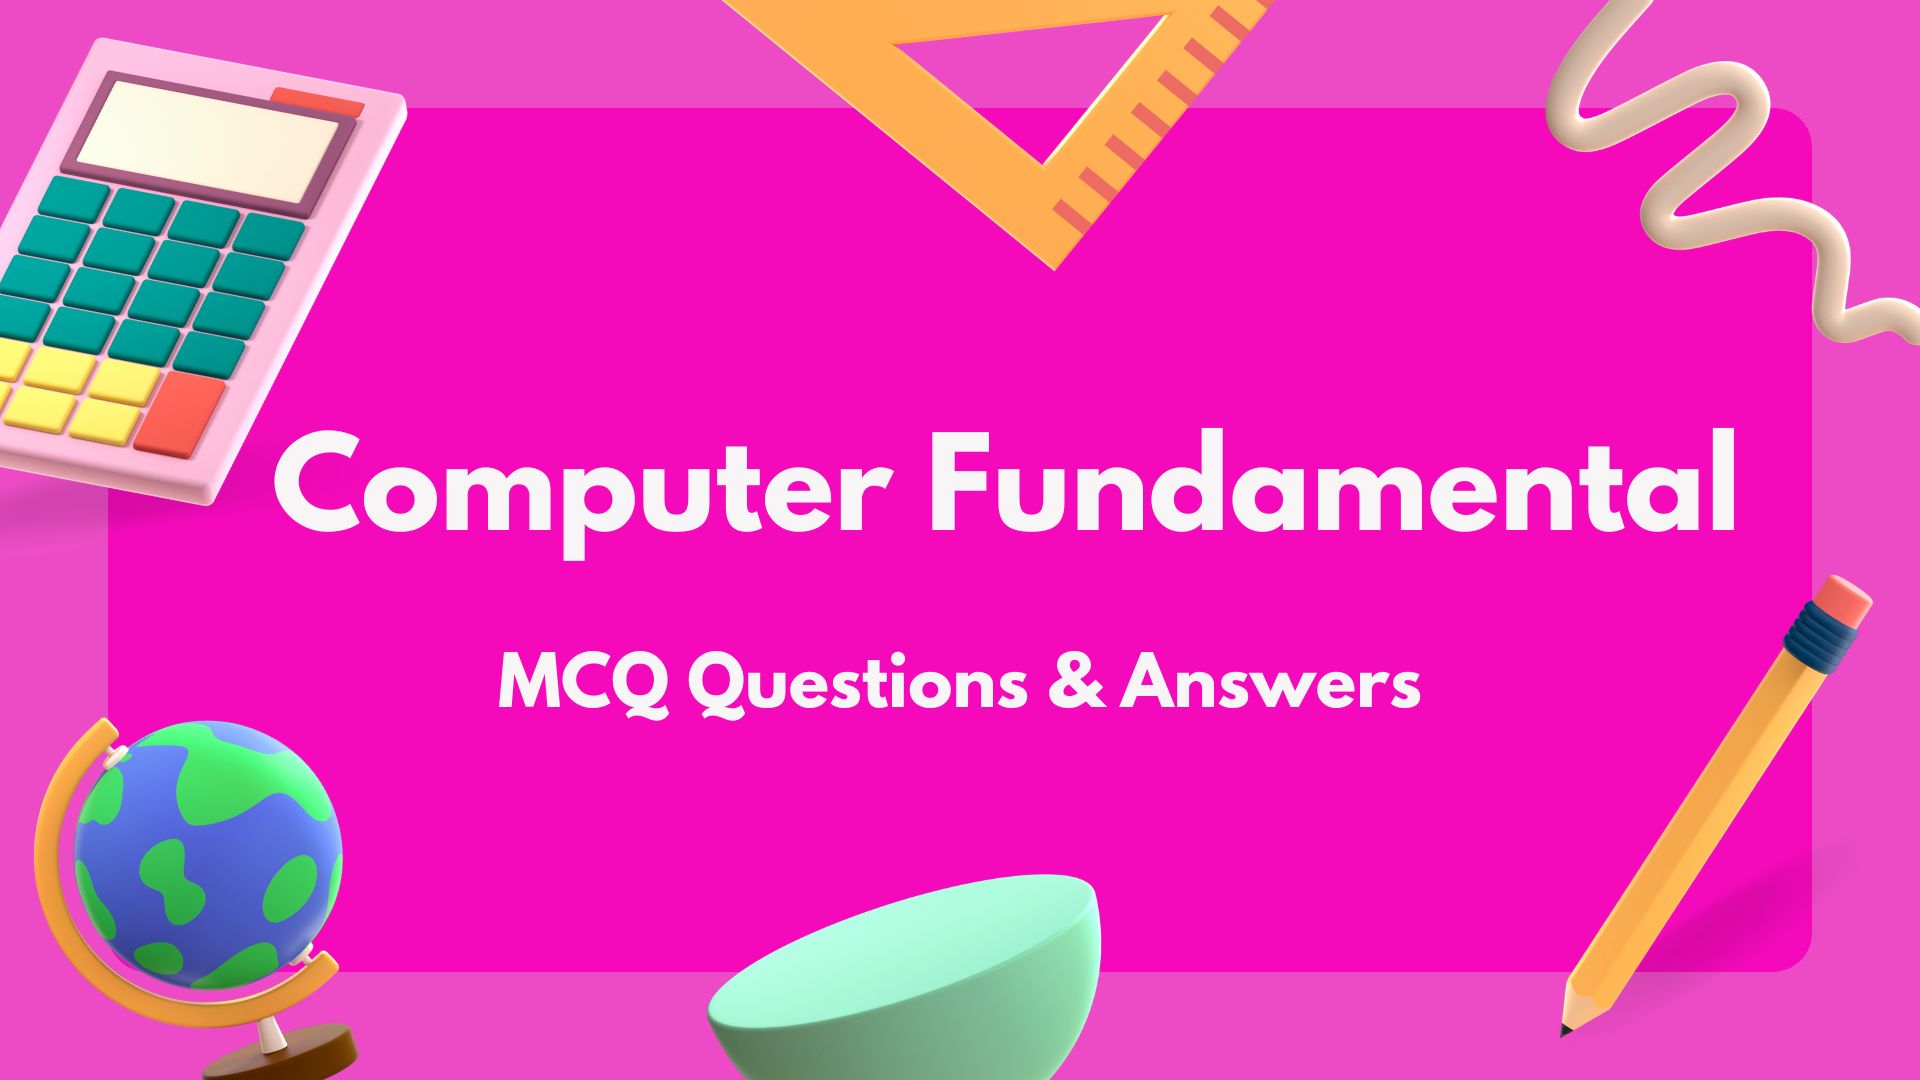 Computer Fundamental MCQ Questions & Answers